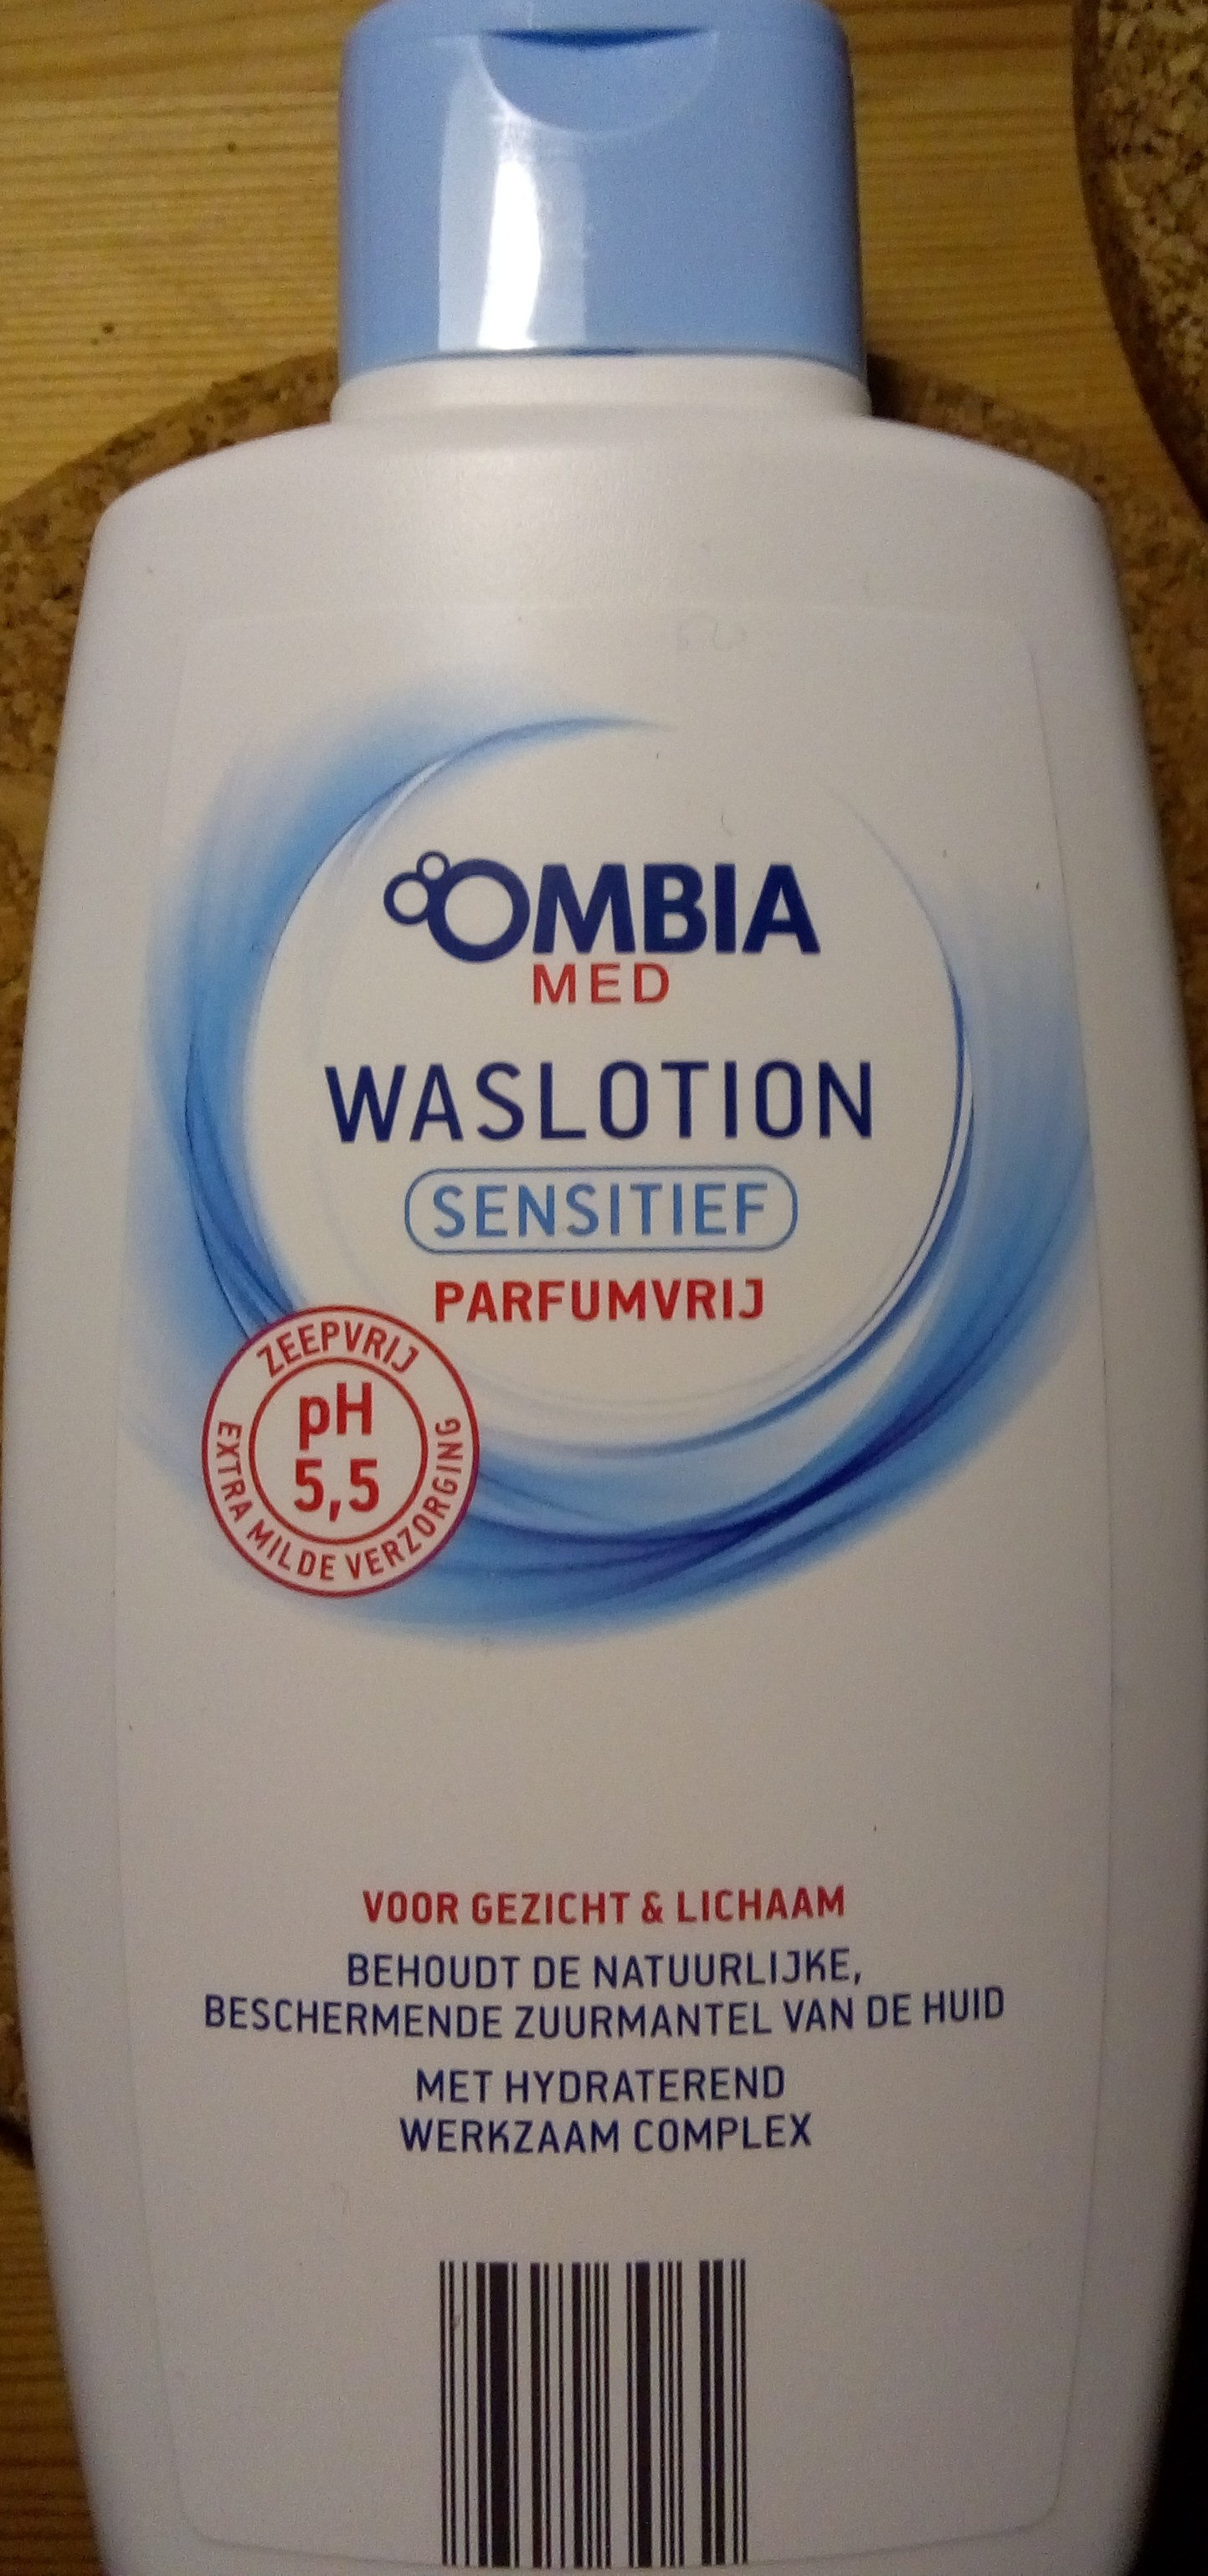 Ombia Med waslotion sensitief - מוצר - nl